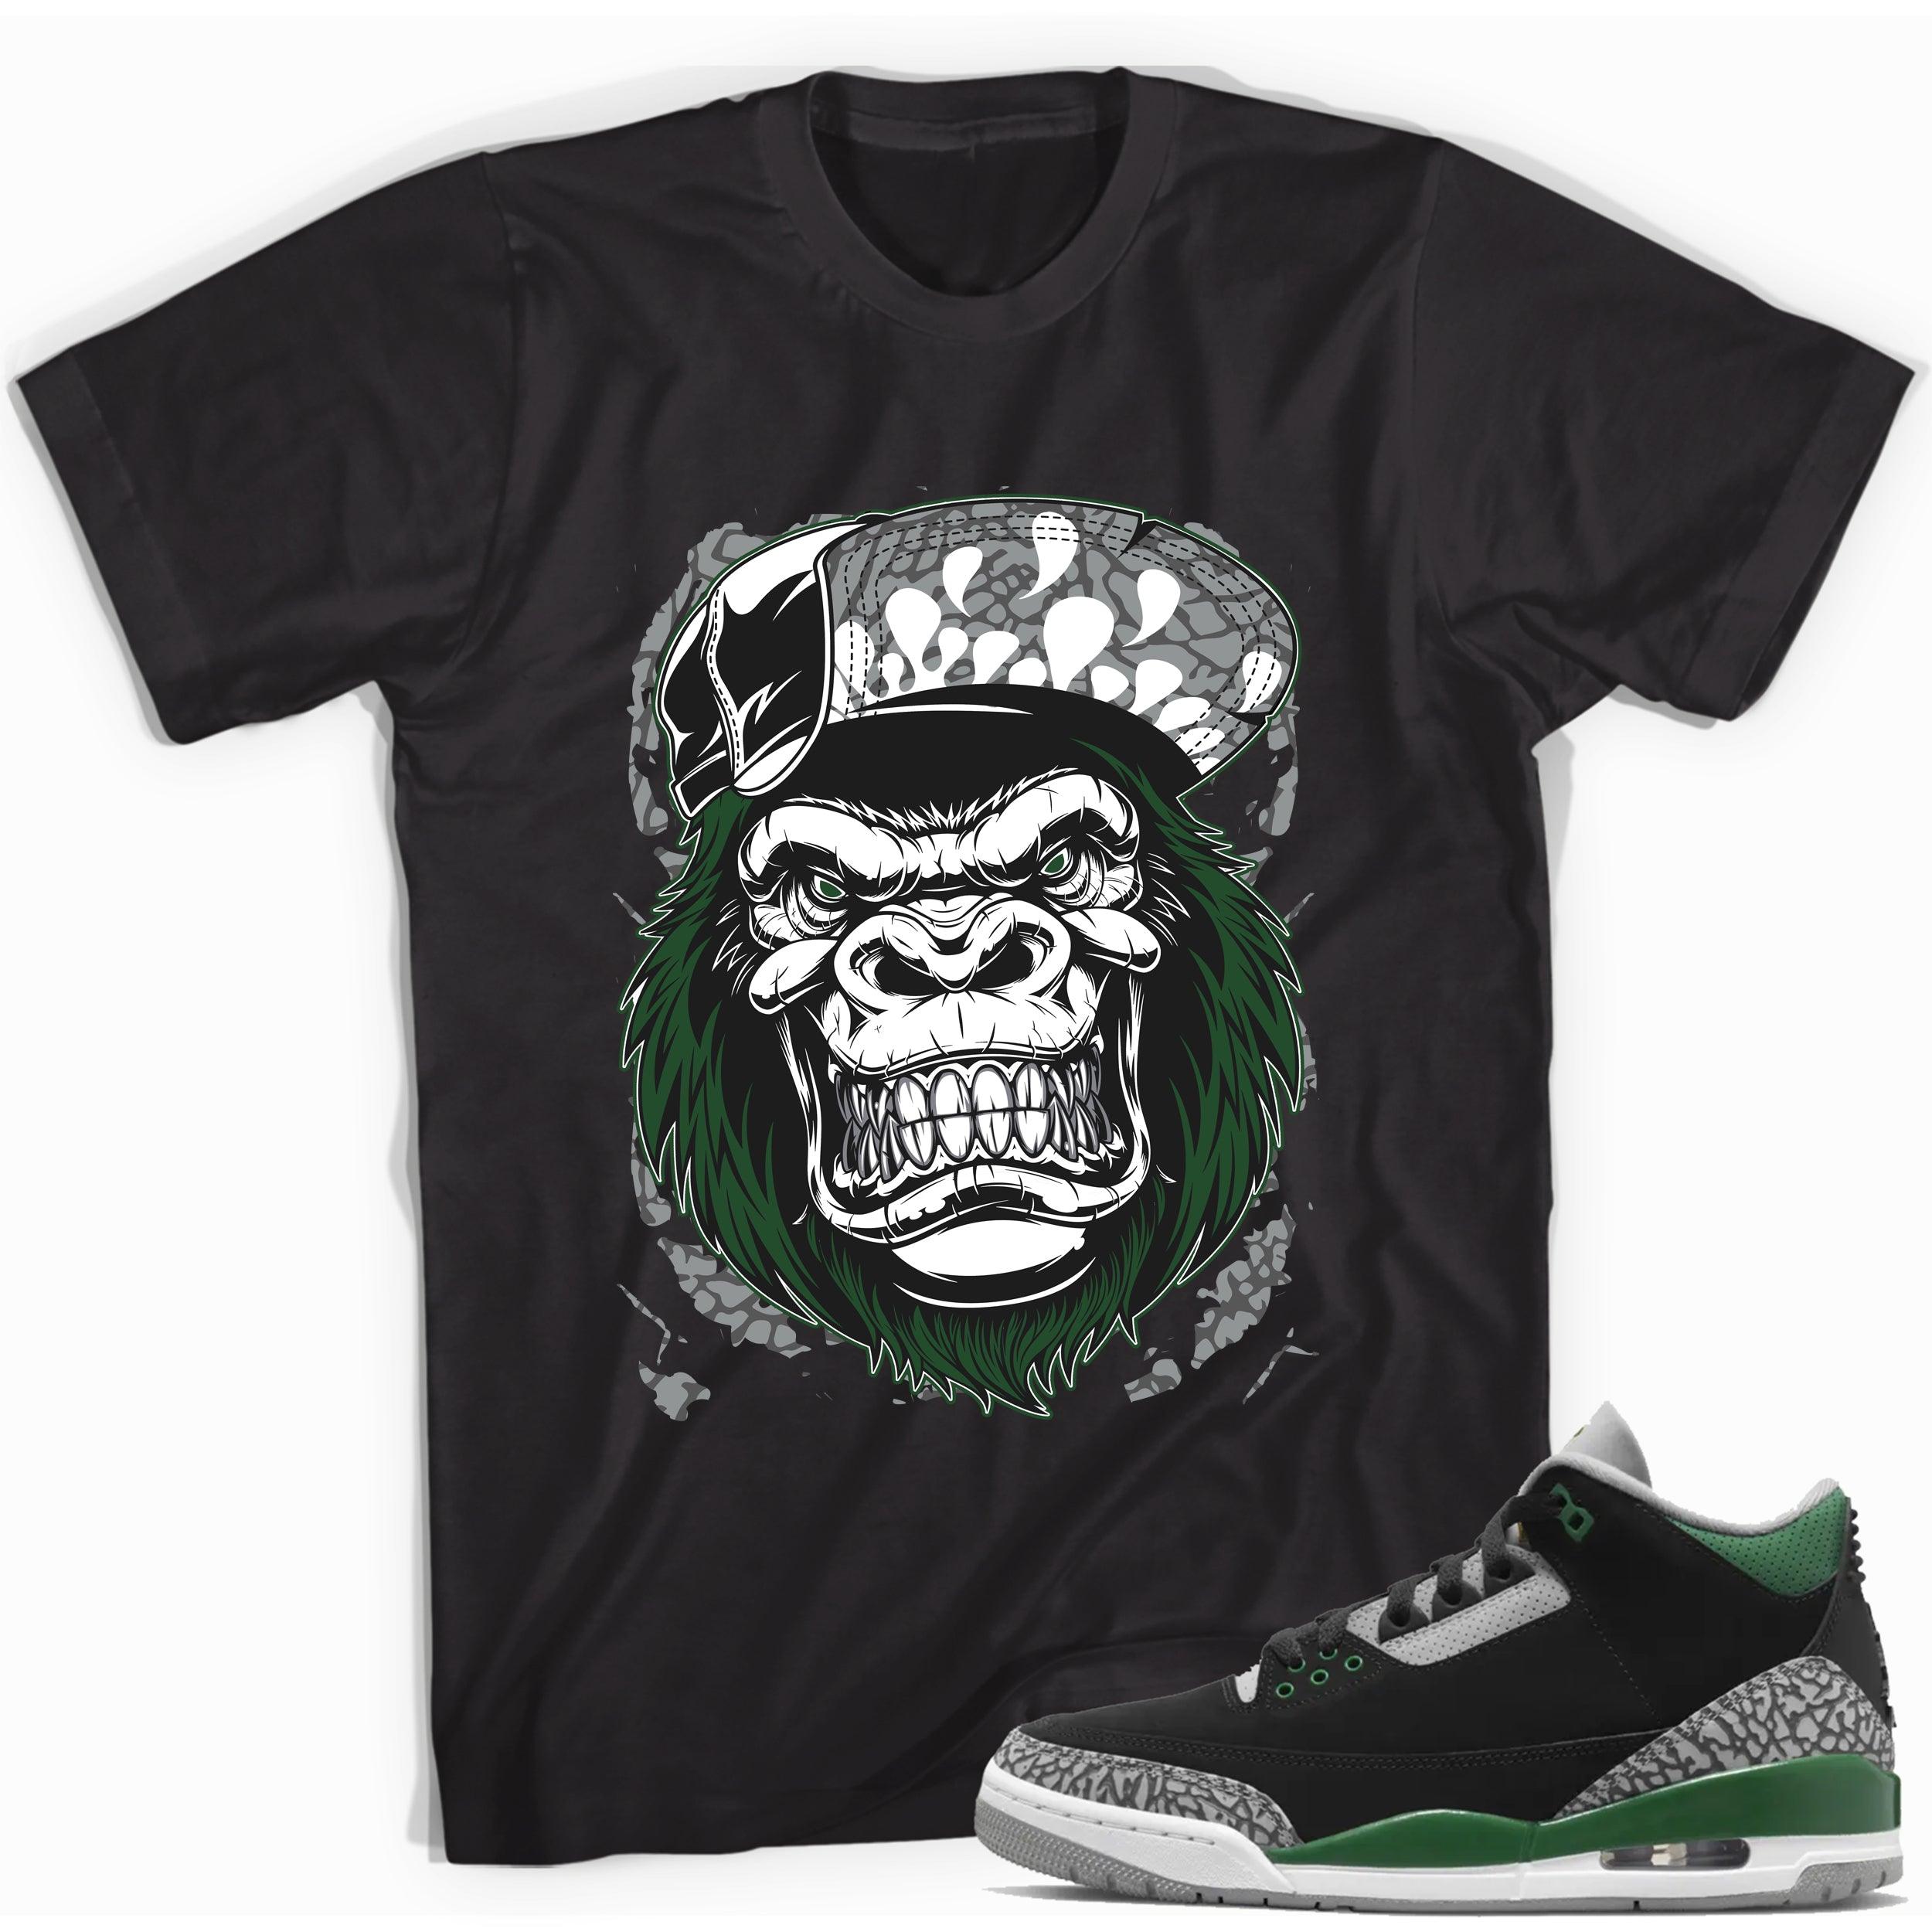 Black Gorilla Beast Shirt Jordan 3s Pine Green photo